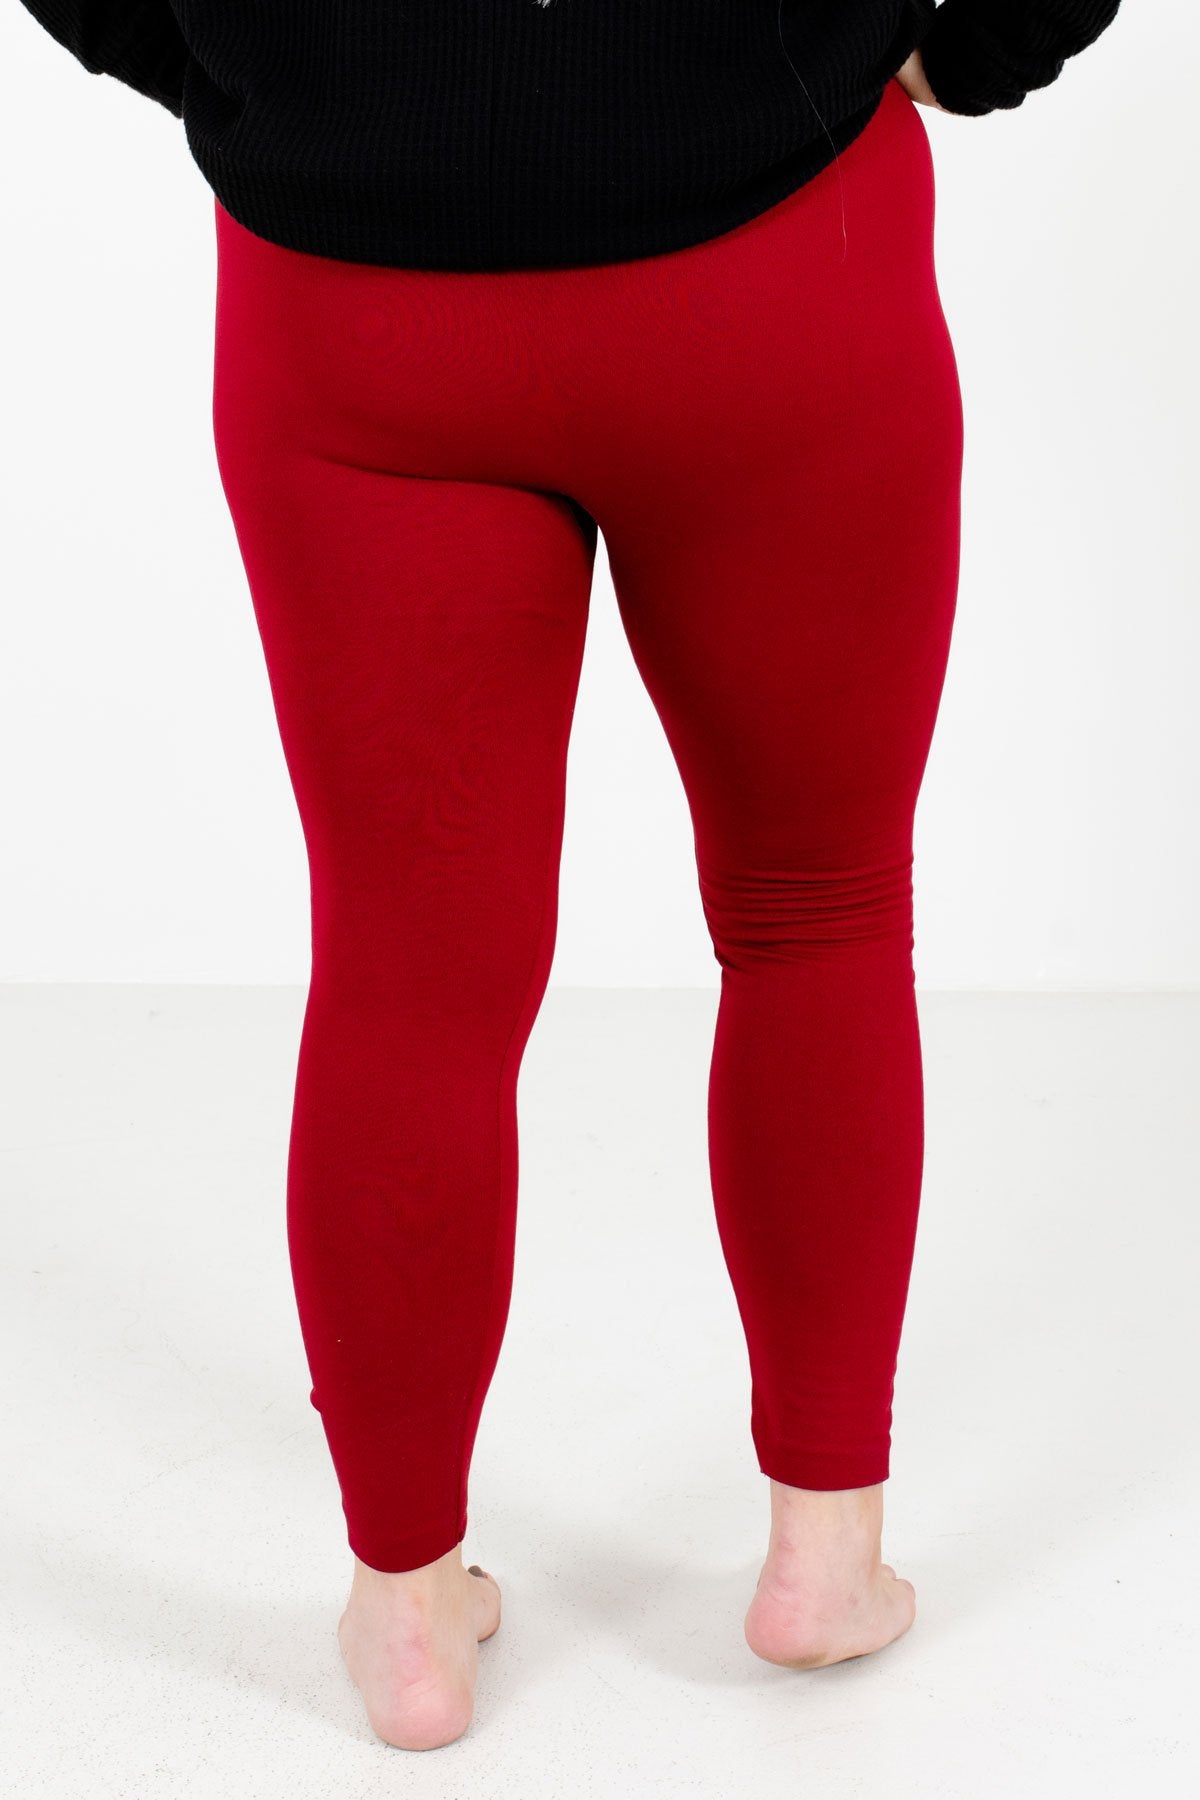 Fleece Leggings Women Winter Red Tights for Girls Plus Size